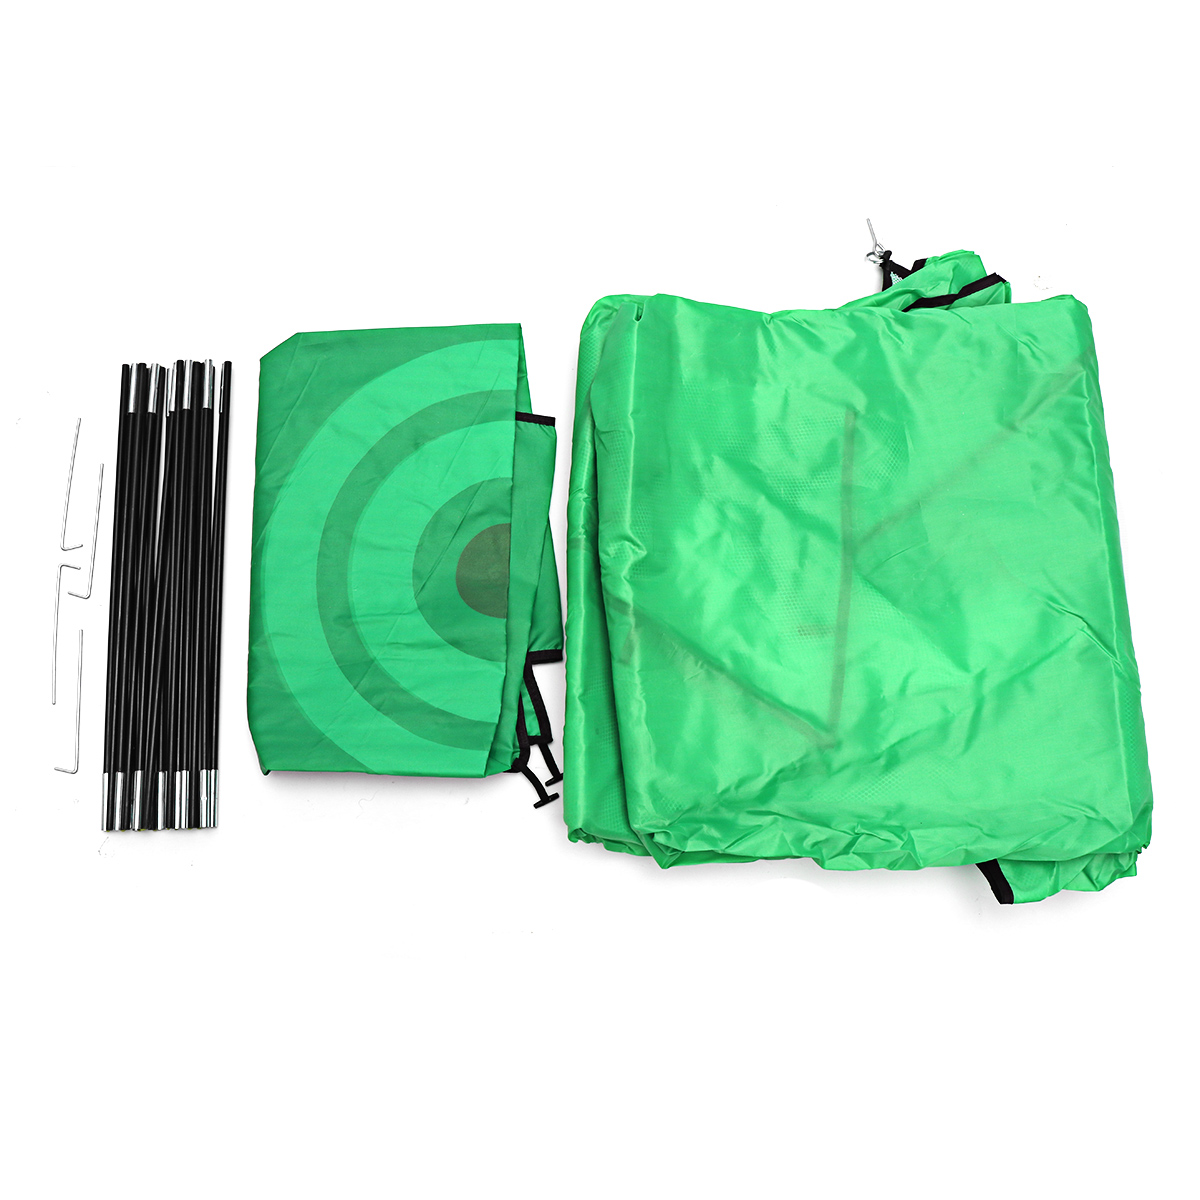 1m-Folding-Golf-Training-Net-Golf-Practice-Net-Aiming-Target-Golf-Accessories-1696443-4